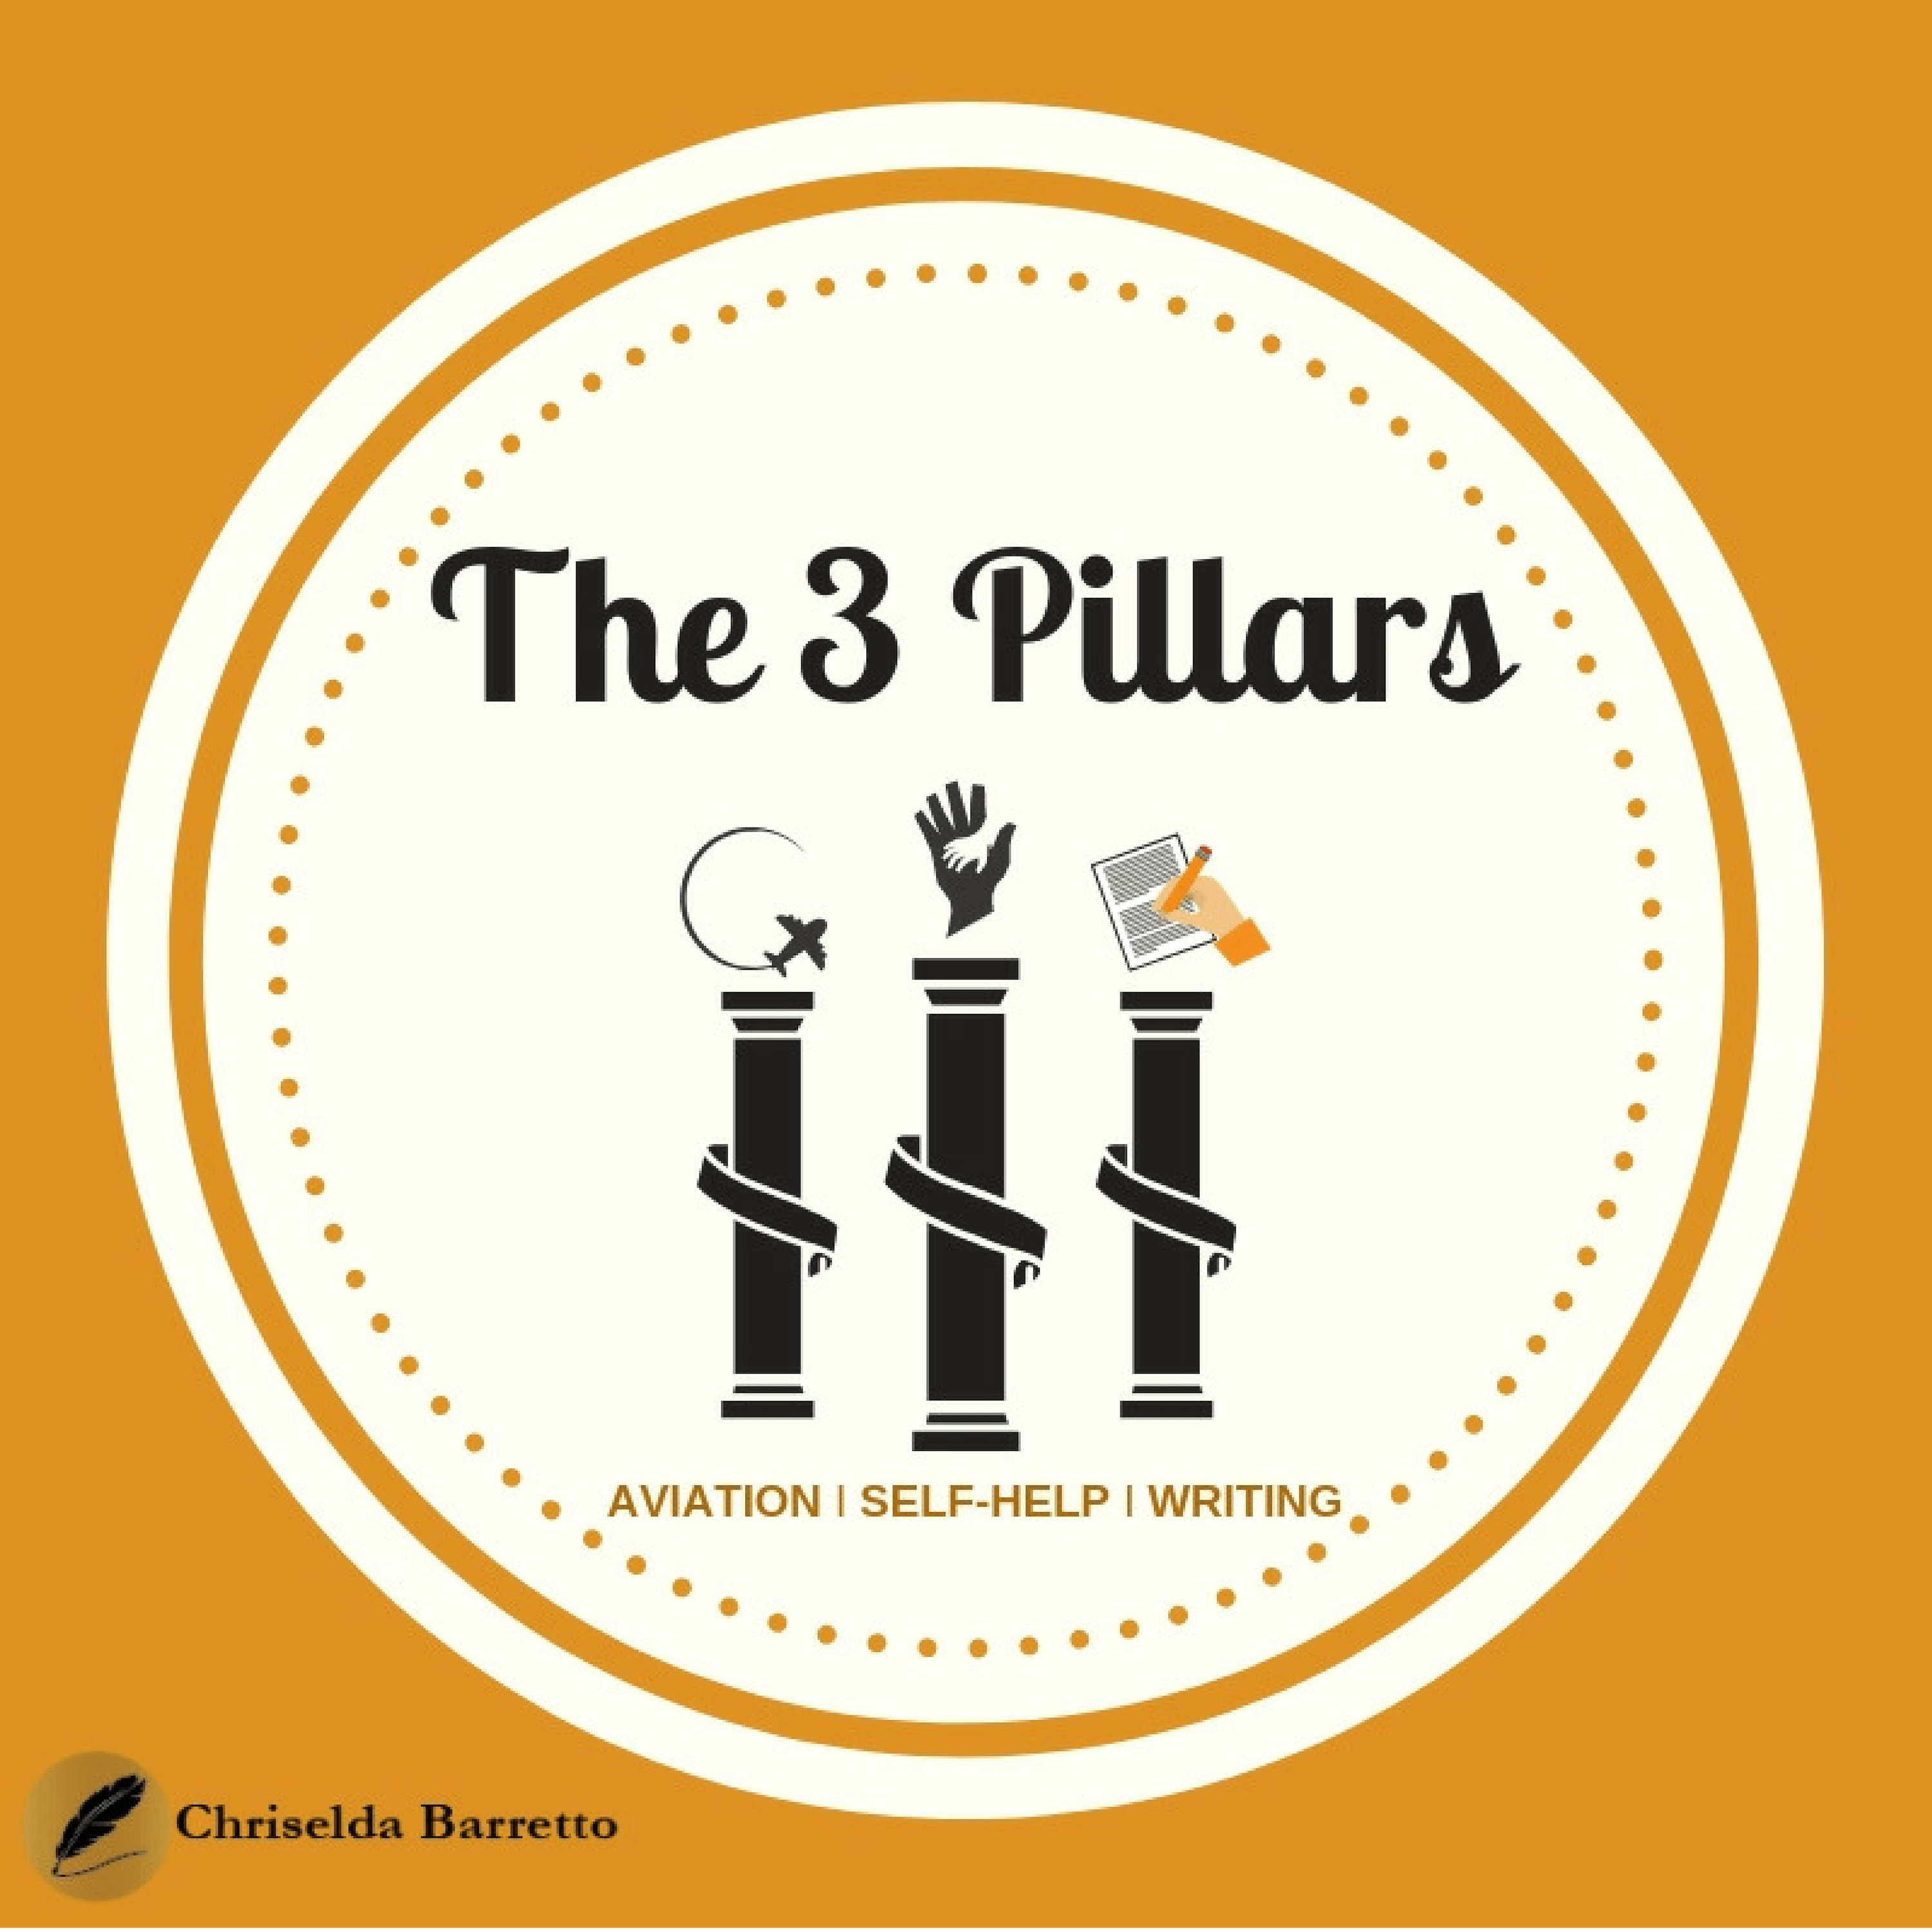 The 3 Pillars